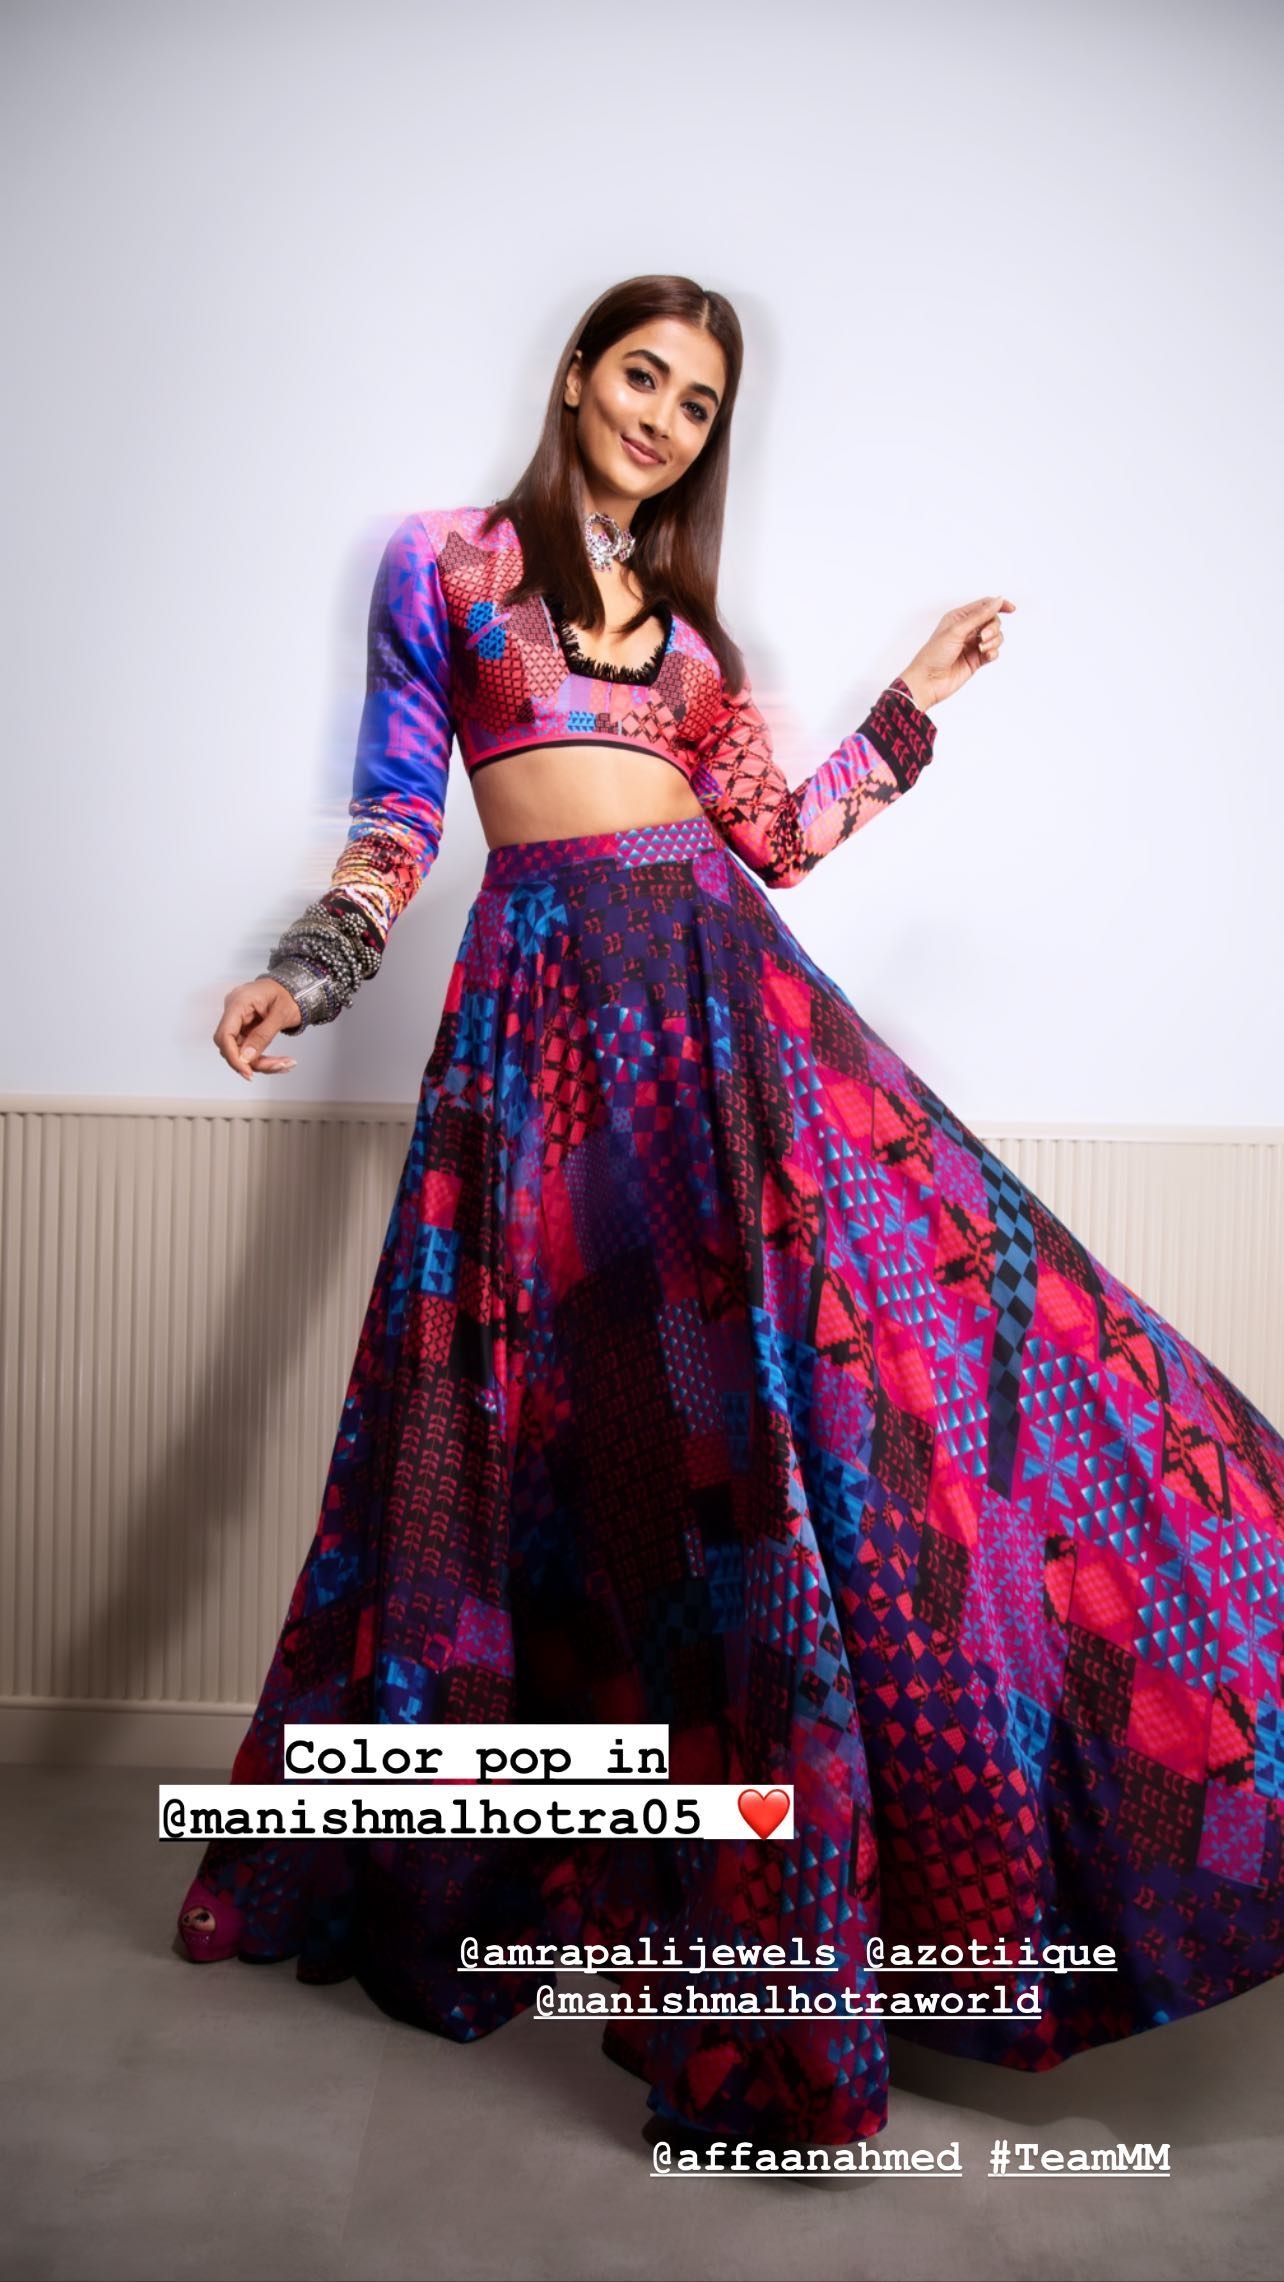 PICS - Pooja Hegde Hot Waist Revealing Colorful Lehenga is